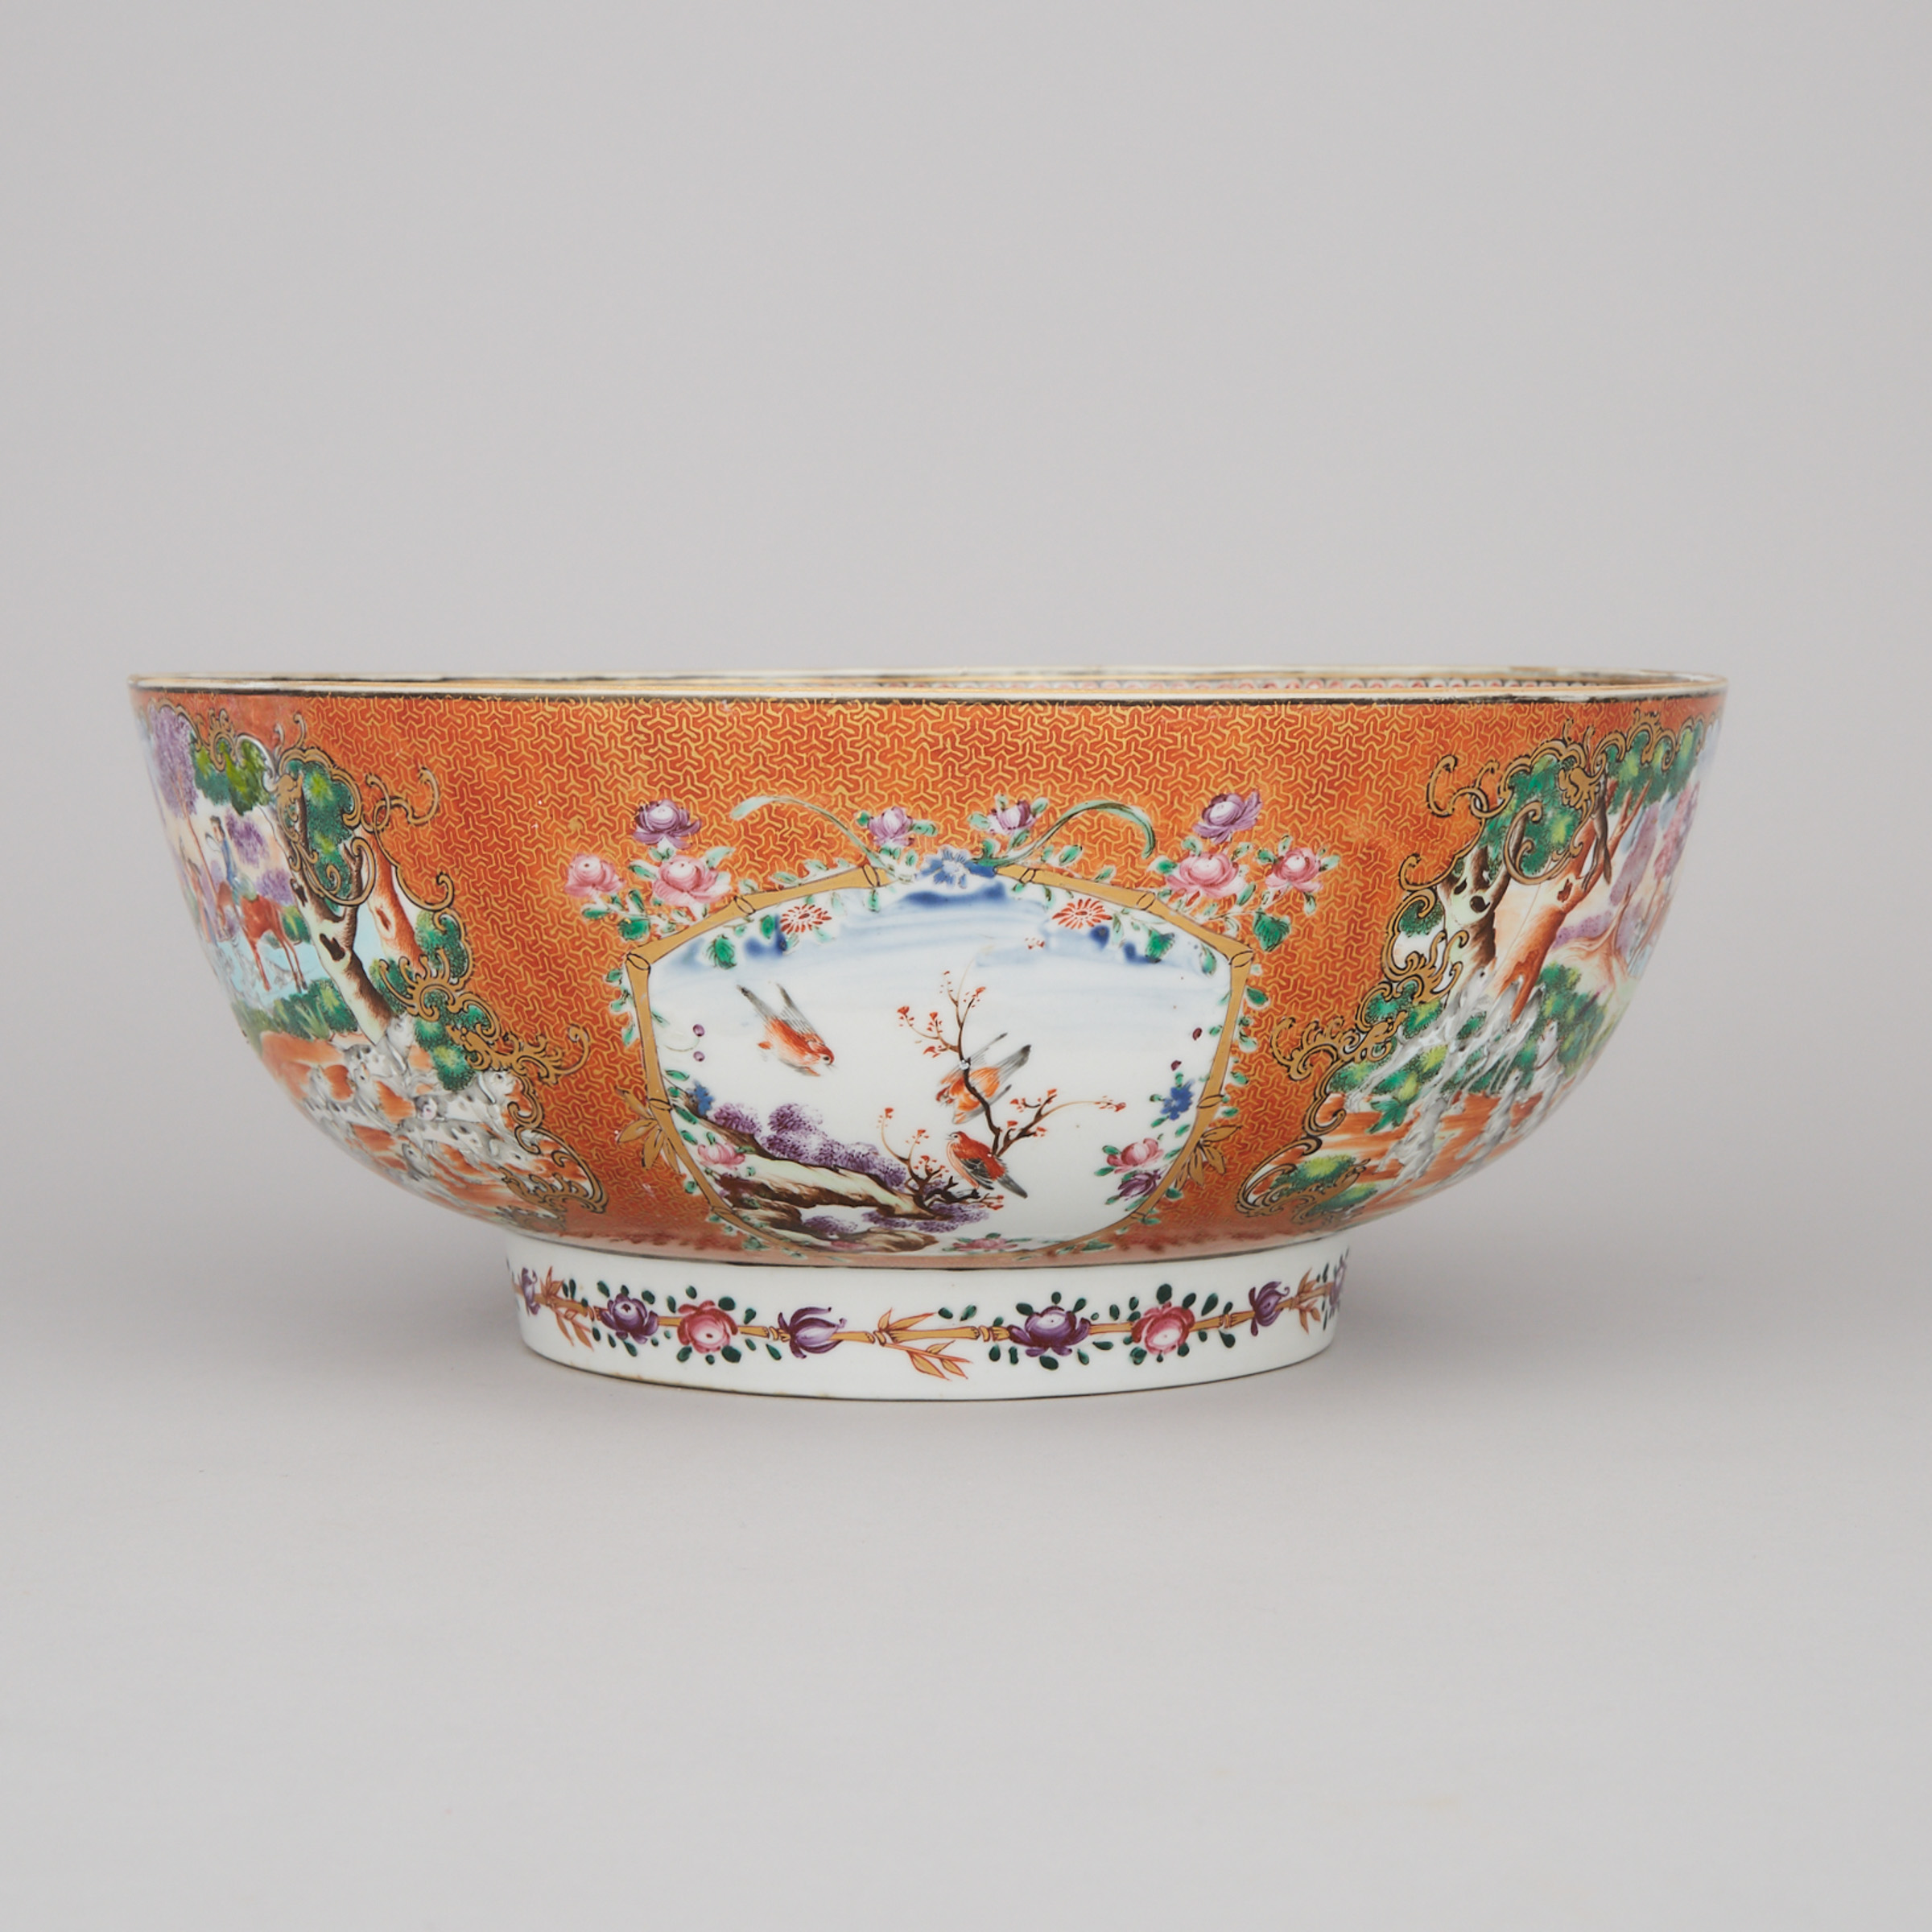 Chinese Export Porcelain Fox Hunt Bowl, c.1780